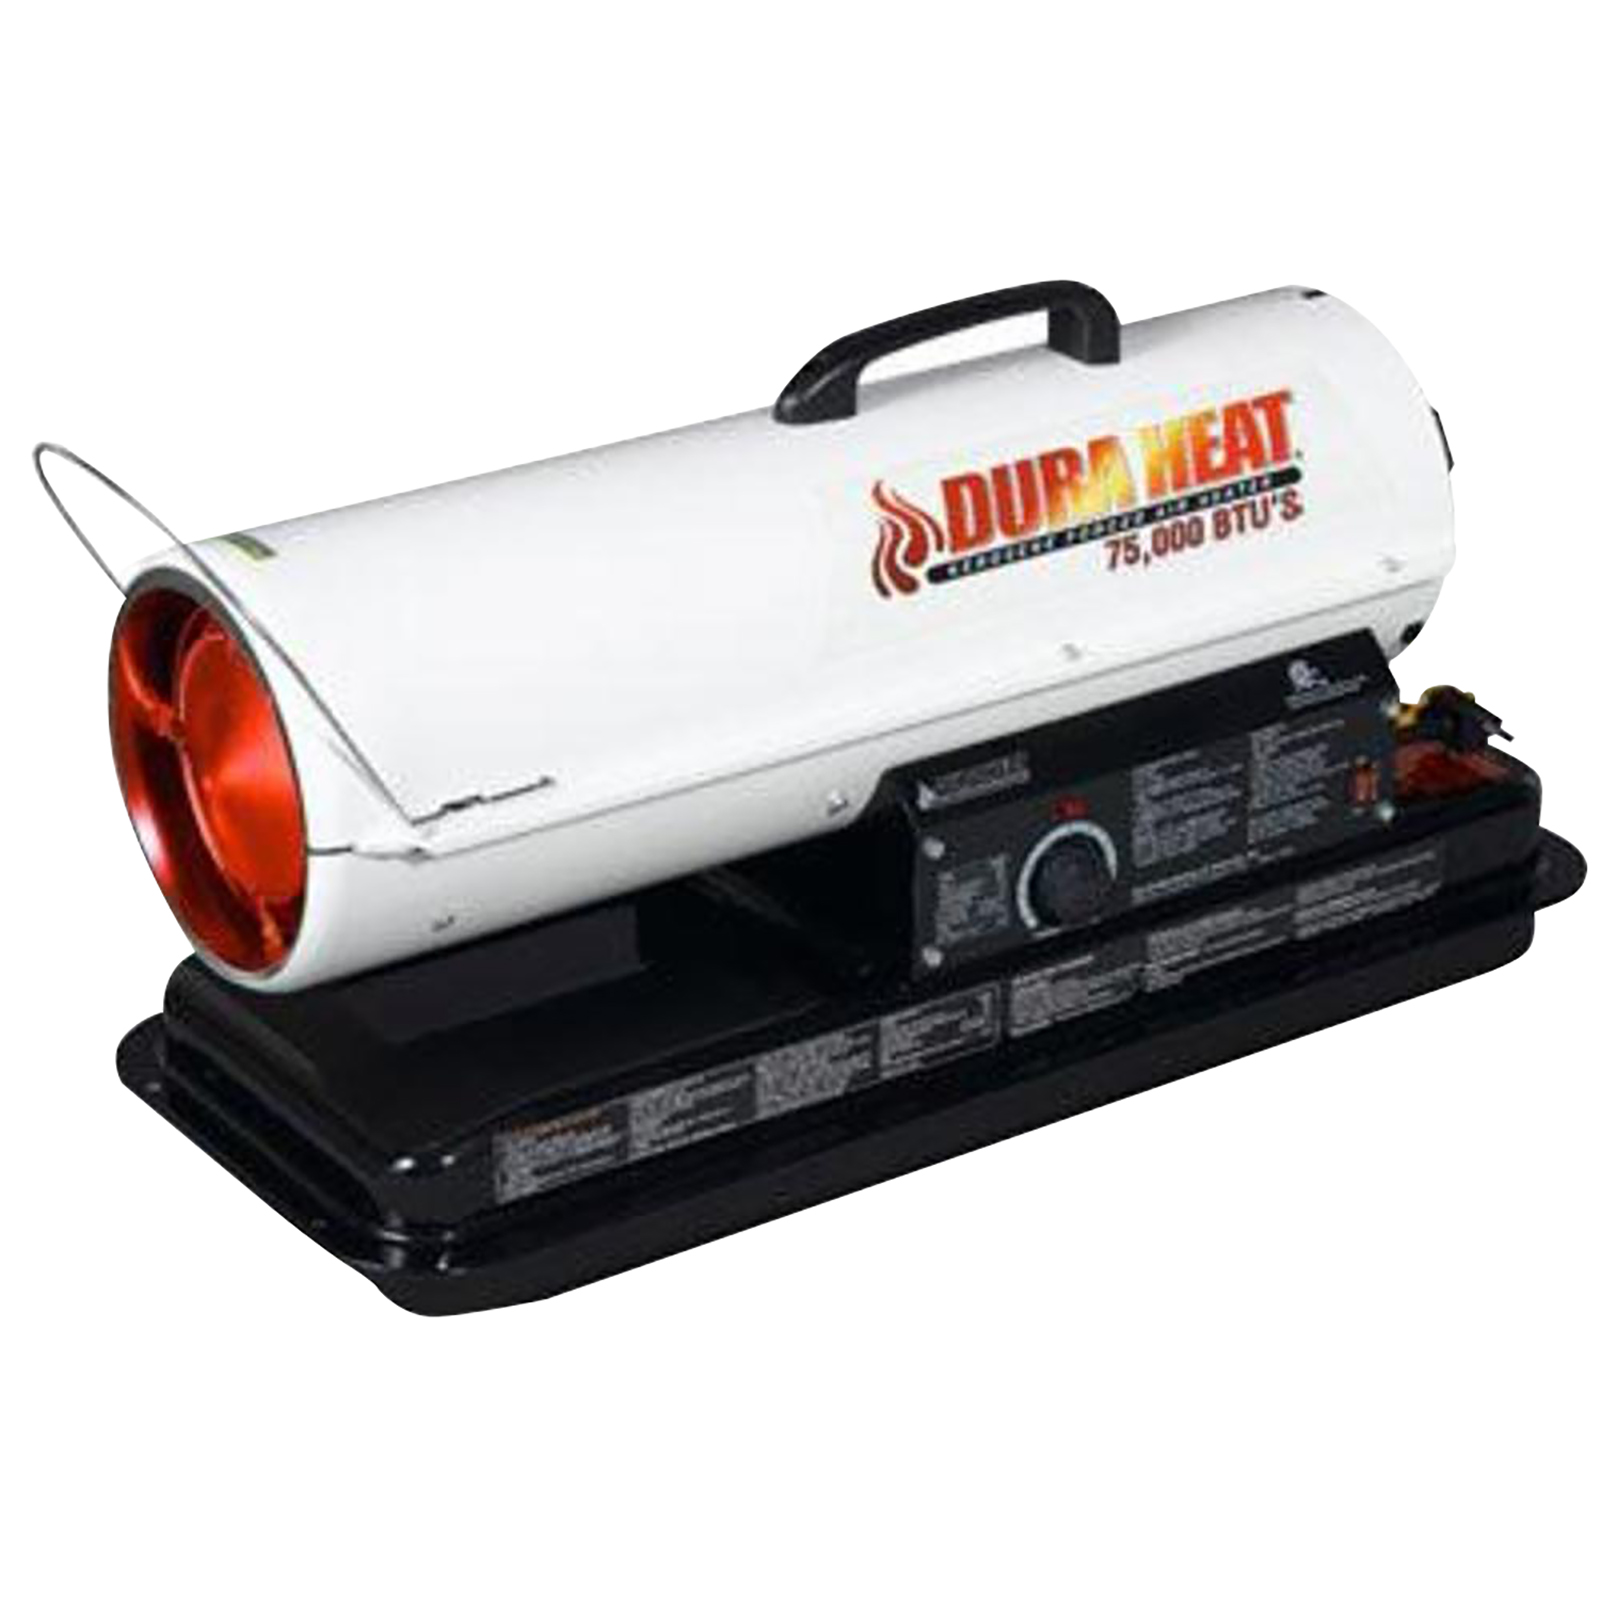 World Marketing DFA80T Dura Heat Kerosene Forced Air Heater with 70,000BTU - White